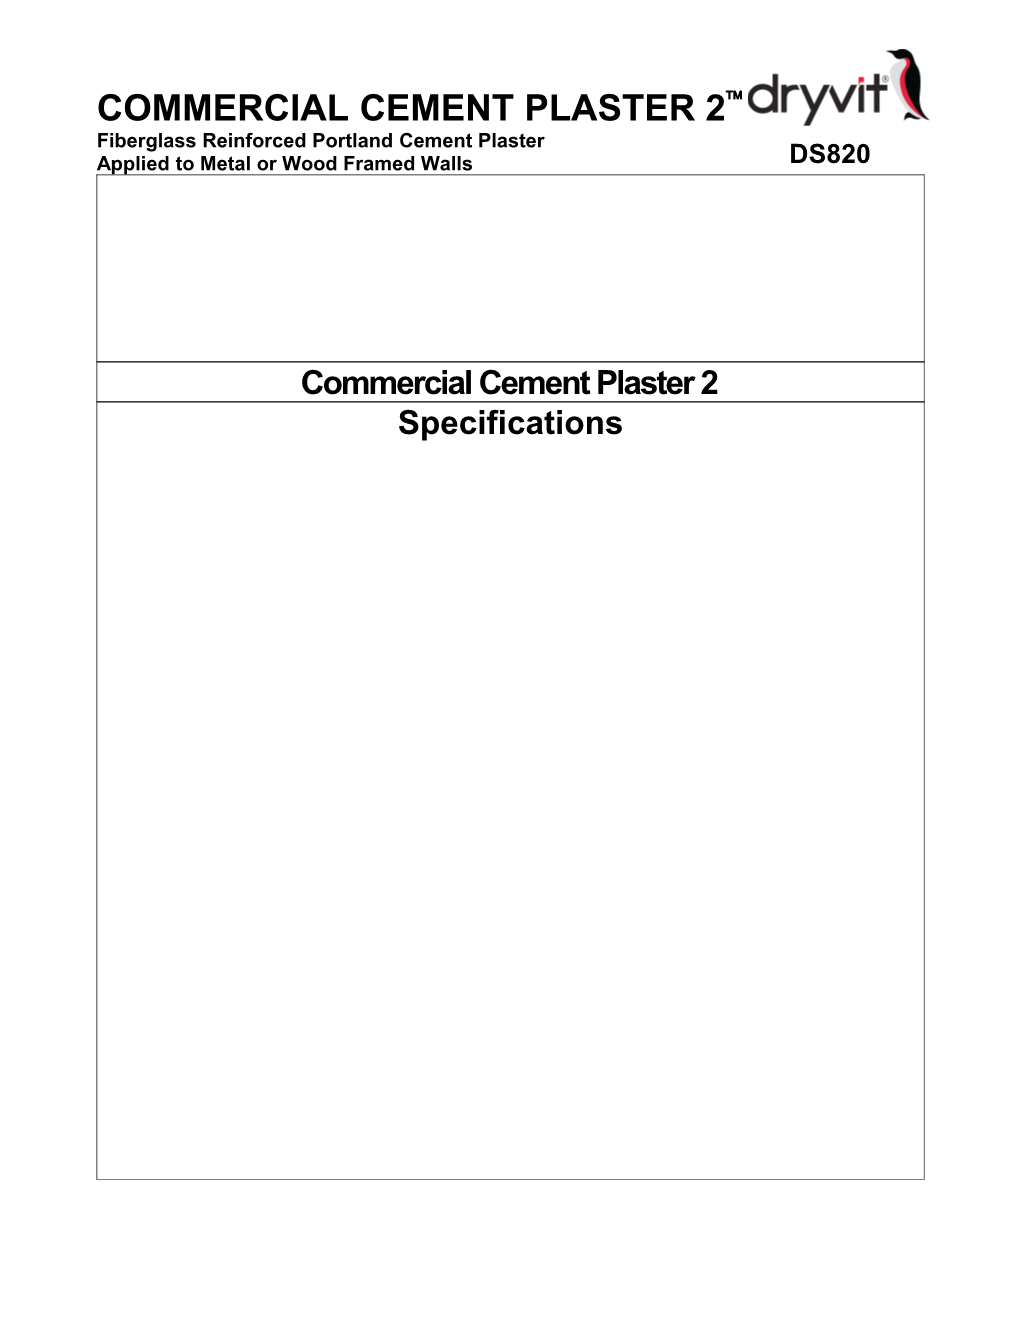 Commercial Cement Plaster 2 - DS820